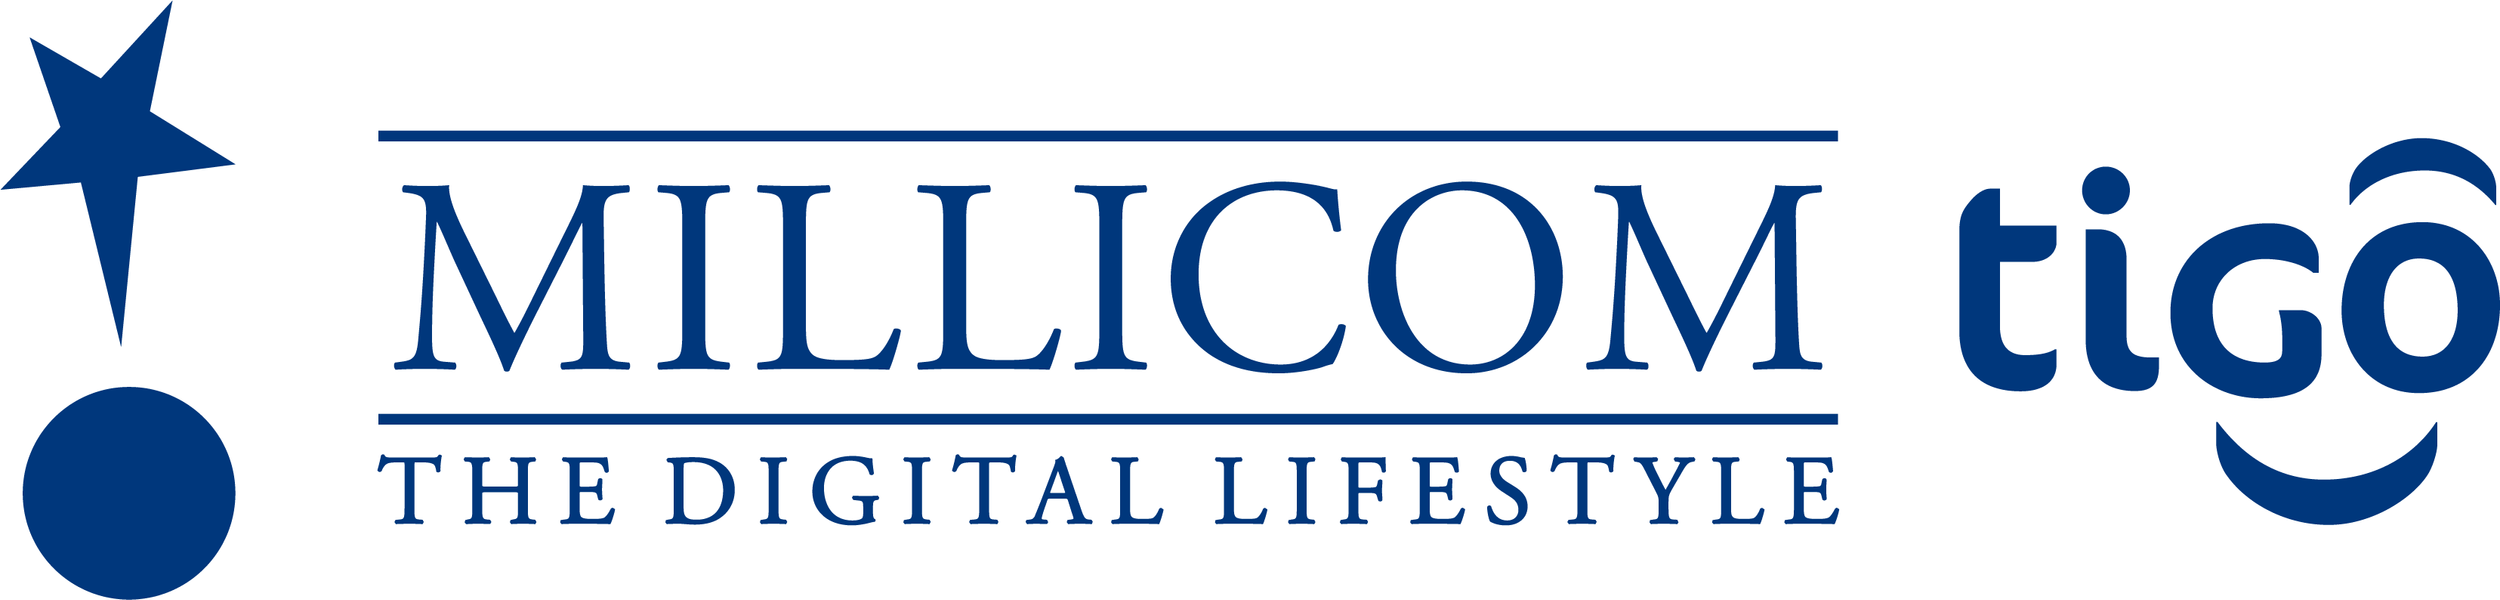 Millicom Logo.png